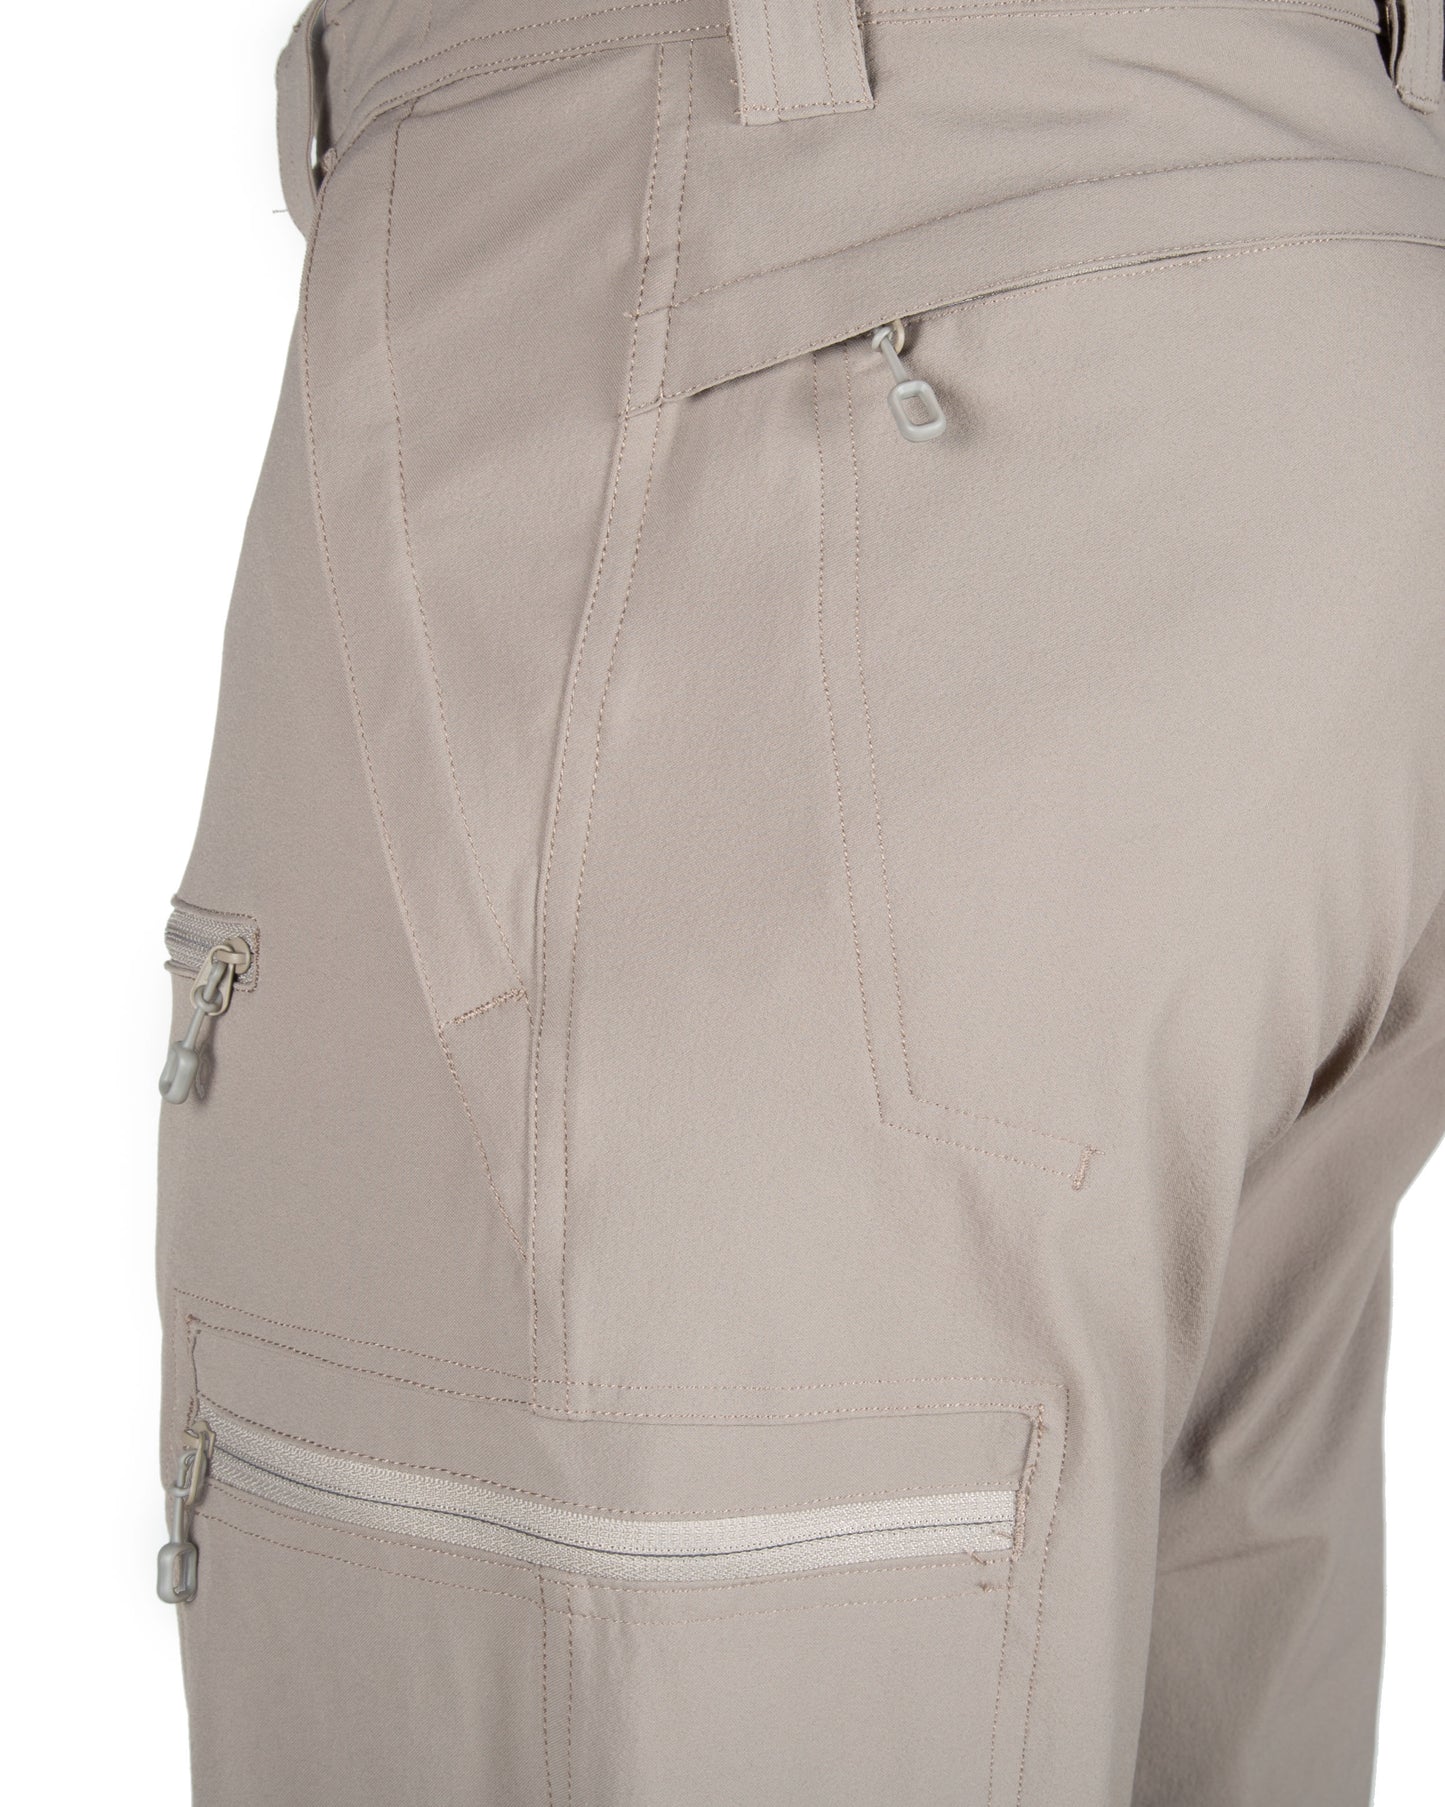 L5 - Velox Light Softshell Pant - Beyond Clothing USA 